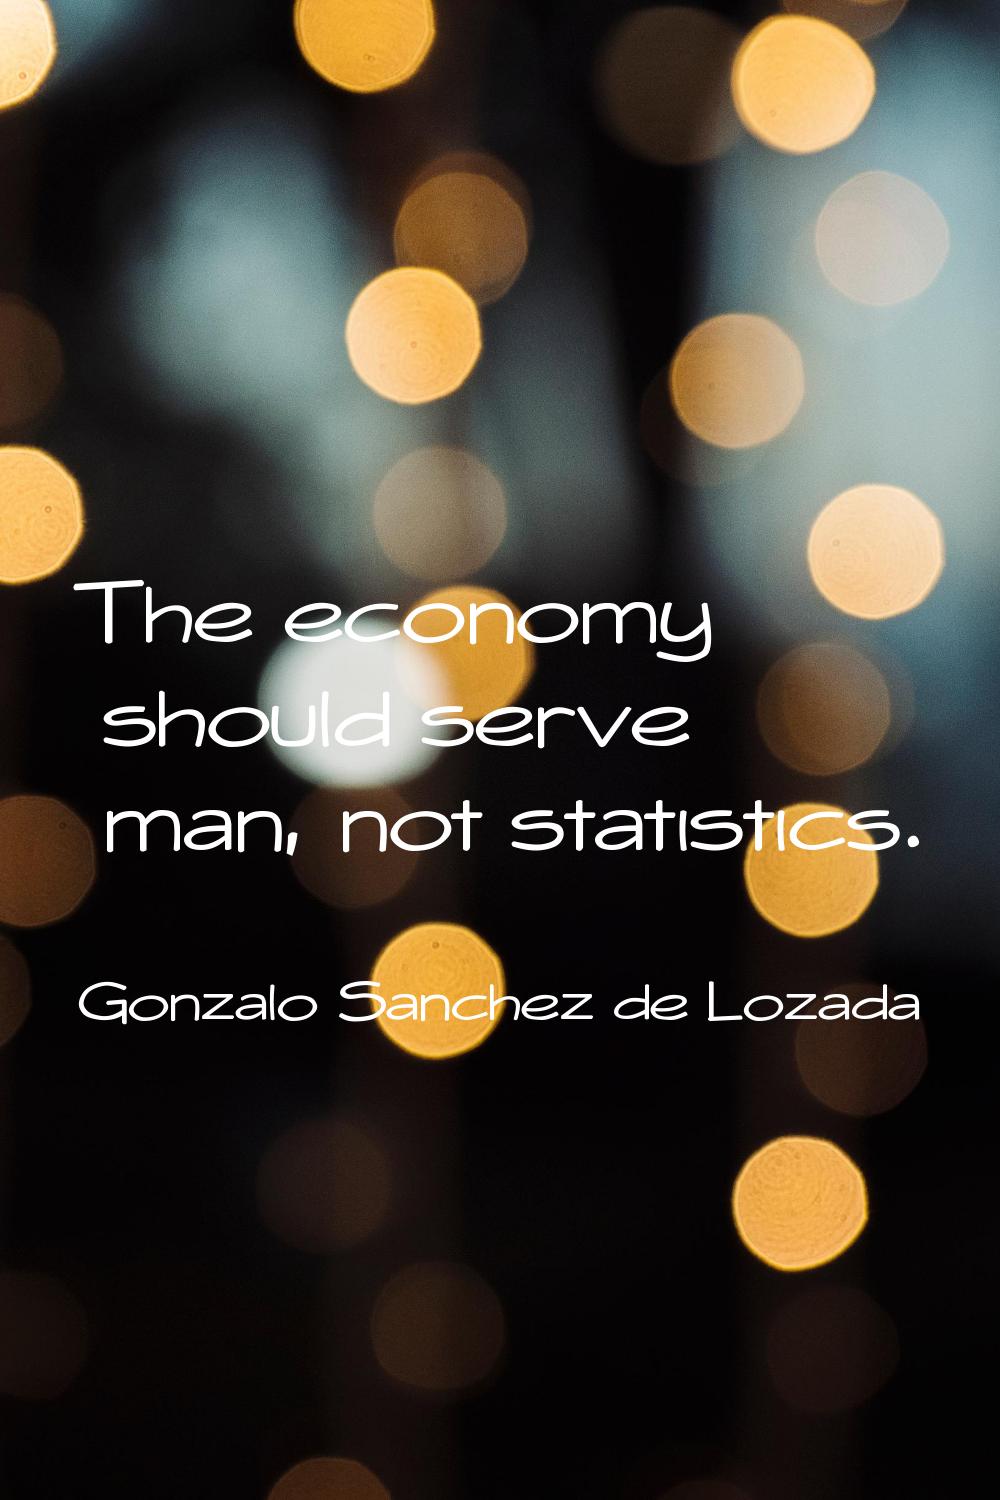 The economy should serve man, not statistics.